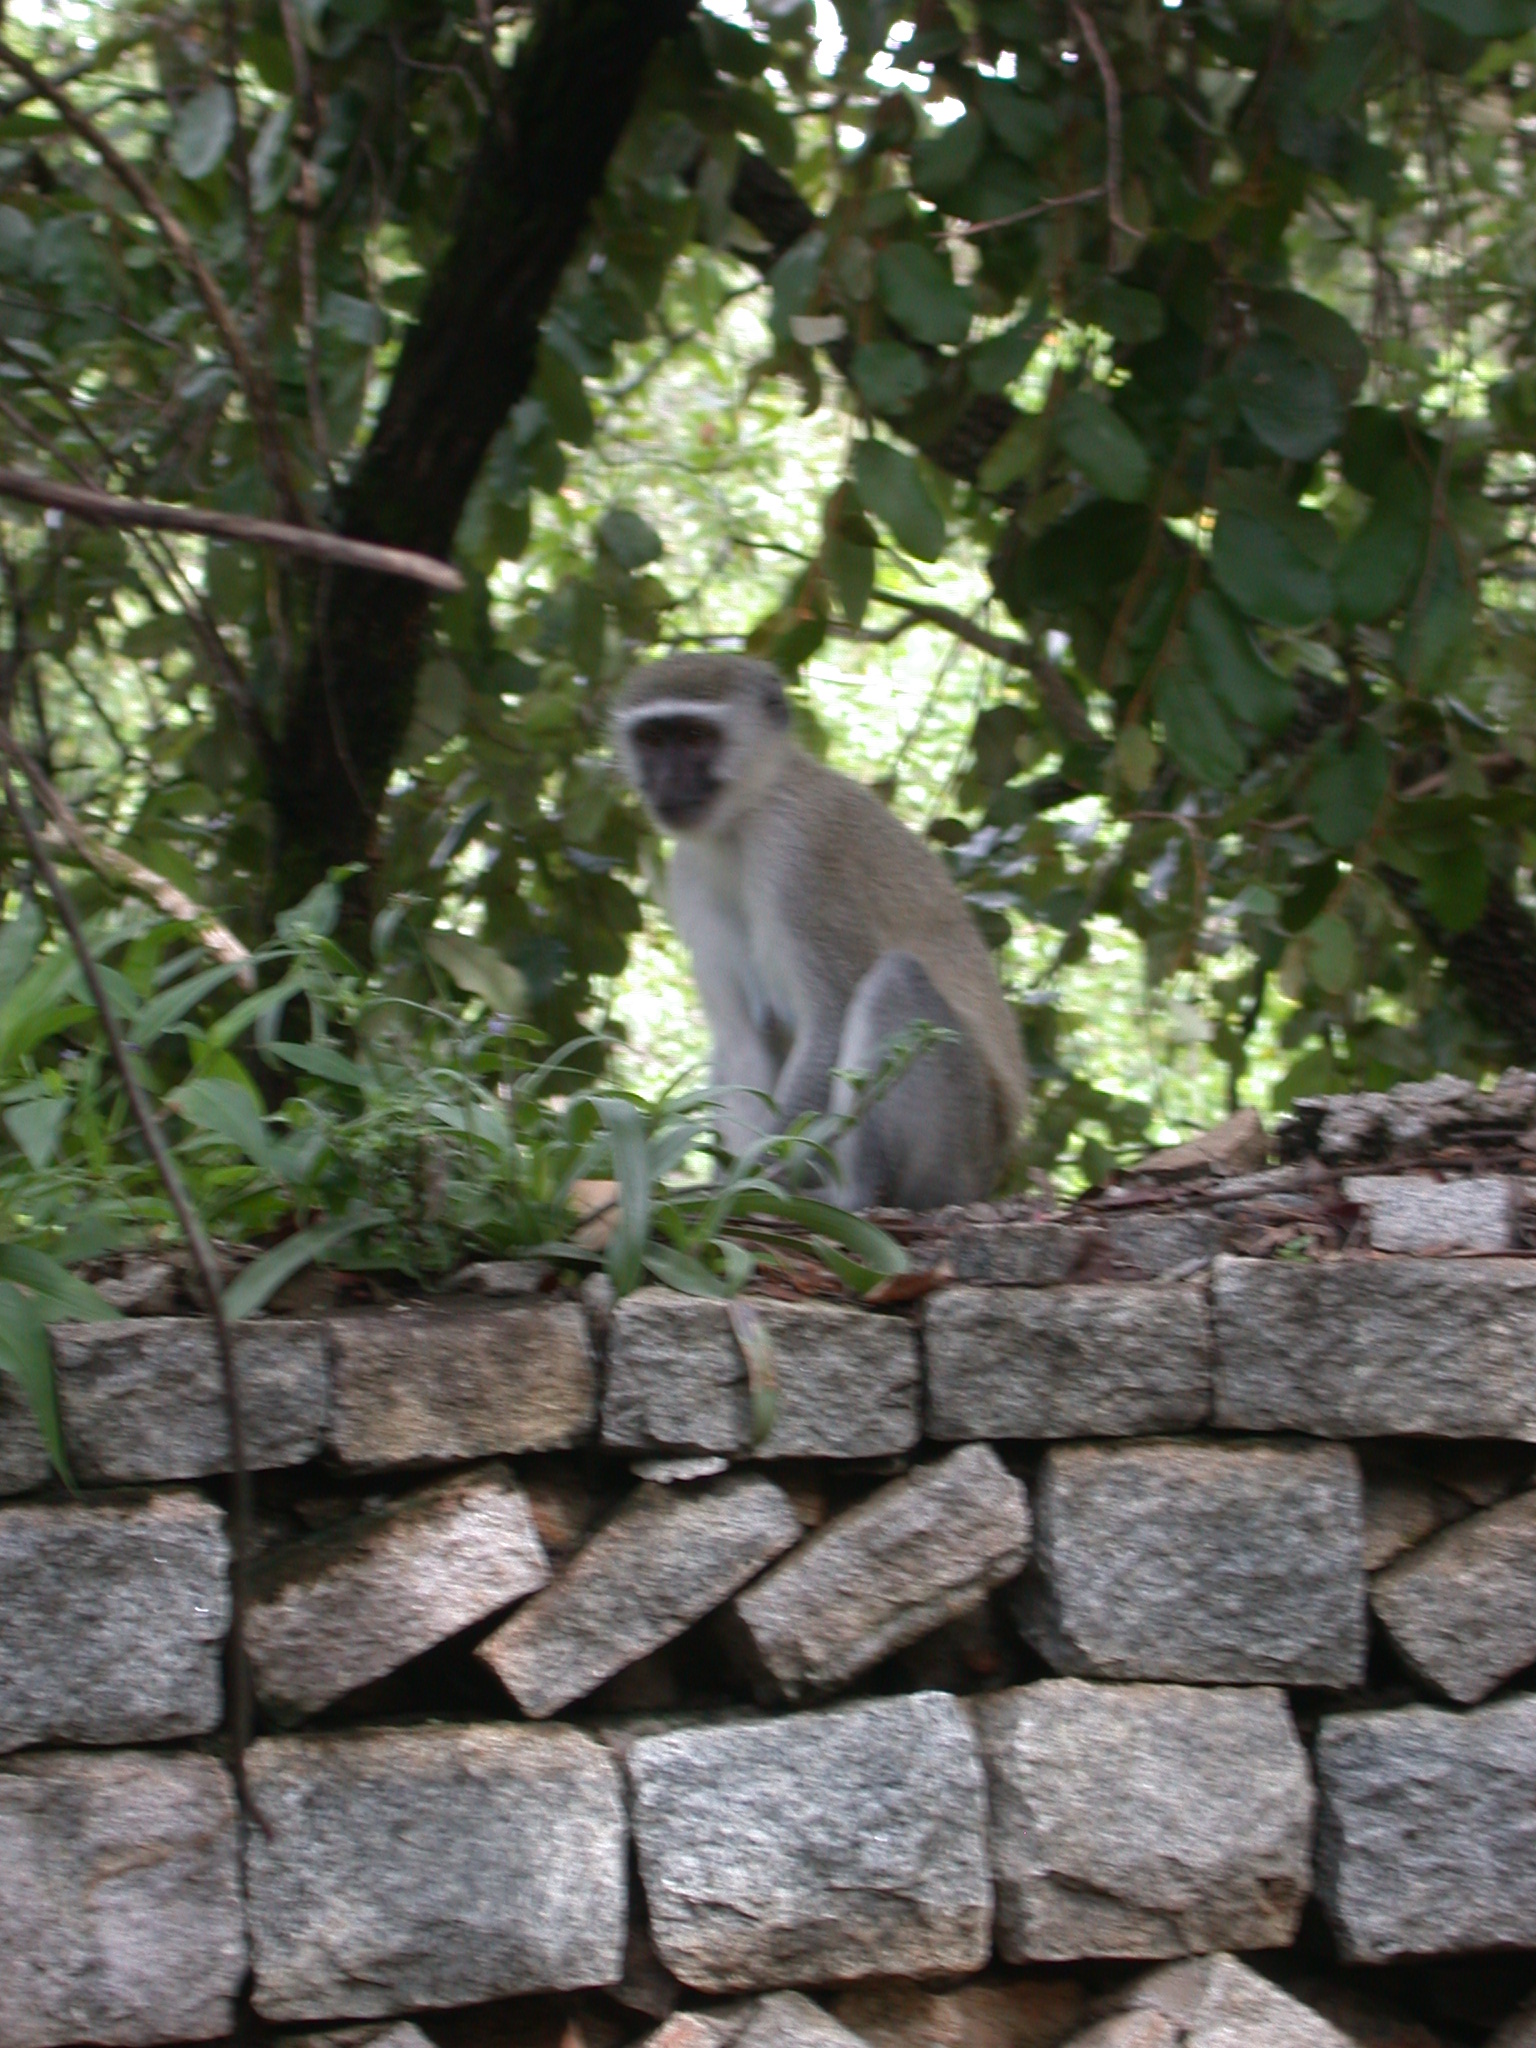 Monkey on Garden Wall Outside My Suite at the Ancient City Lodge, Great Zimbabwe, Outside Masvingo, Zimbabwe